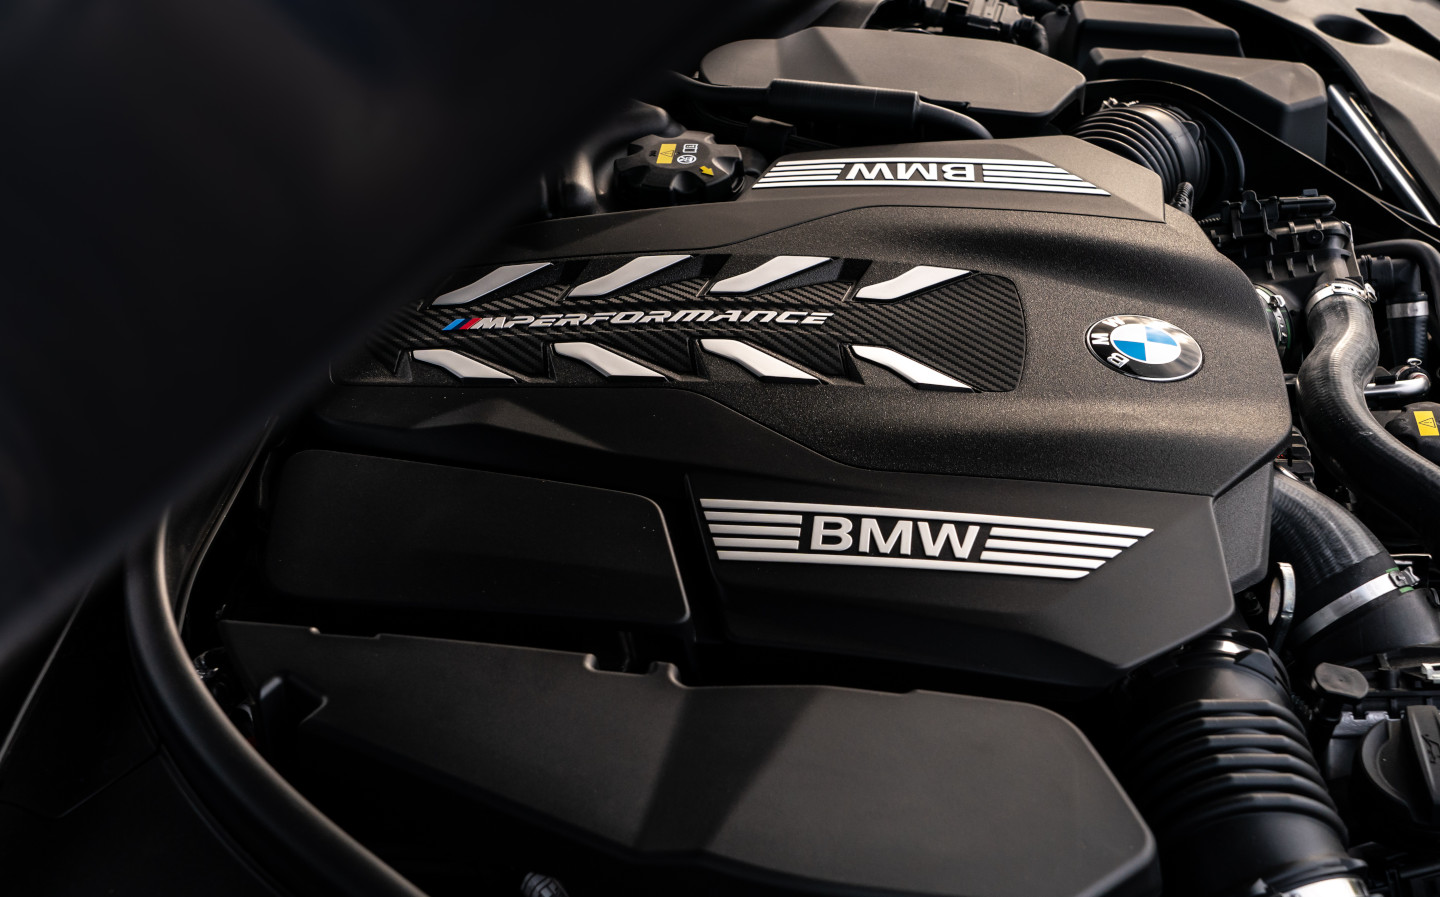 Jeremy Clarkson: The "astonishing" BMW M550i is a return to form